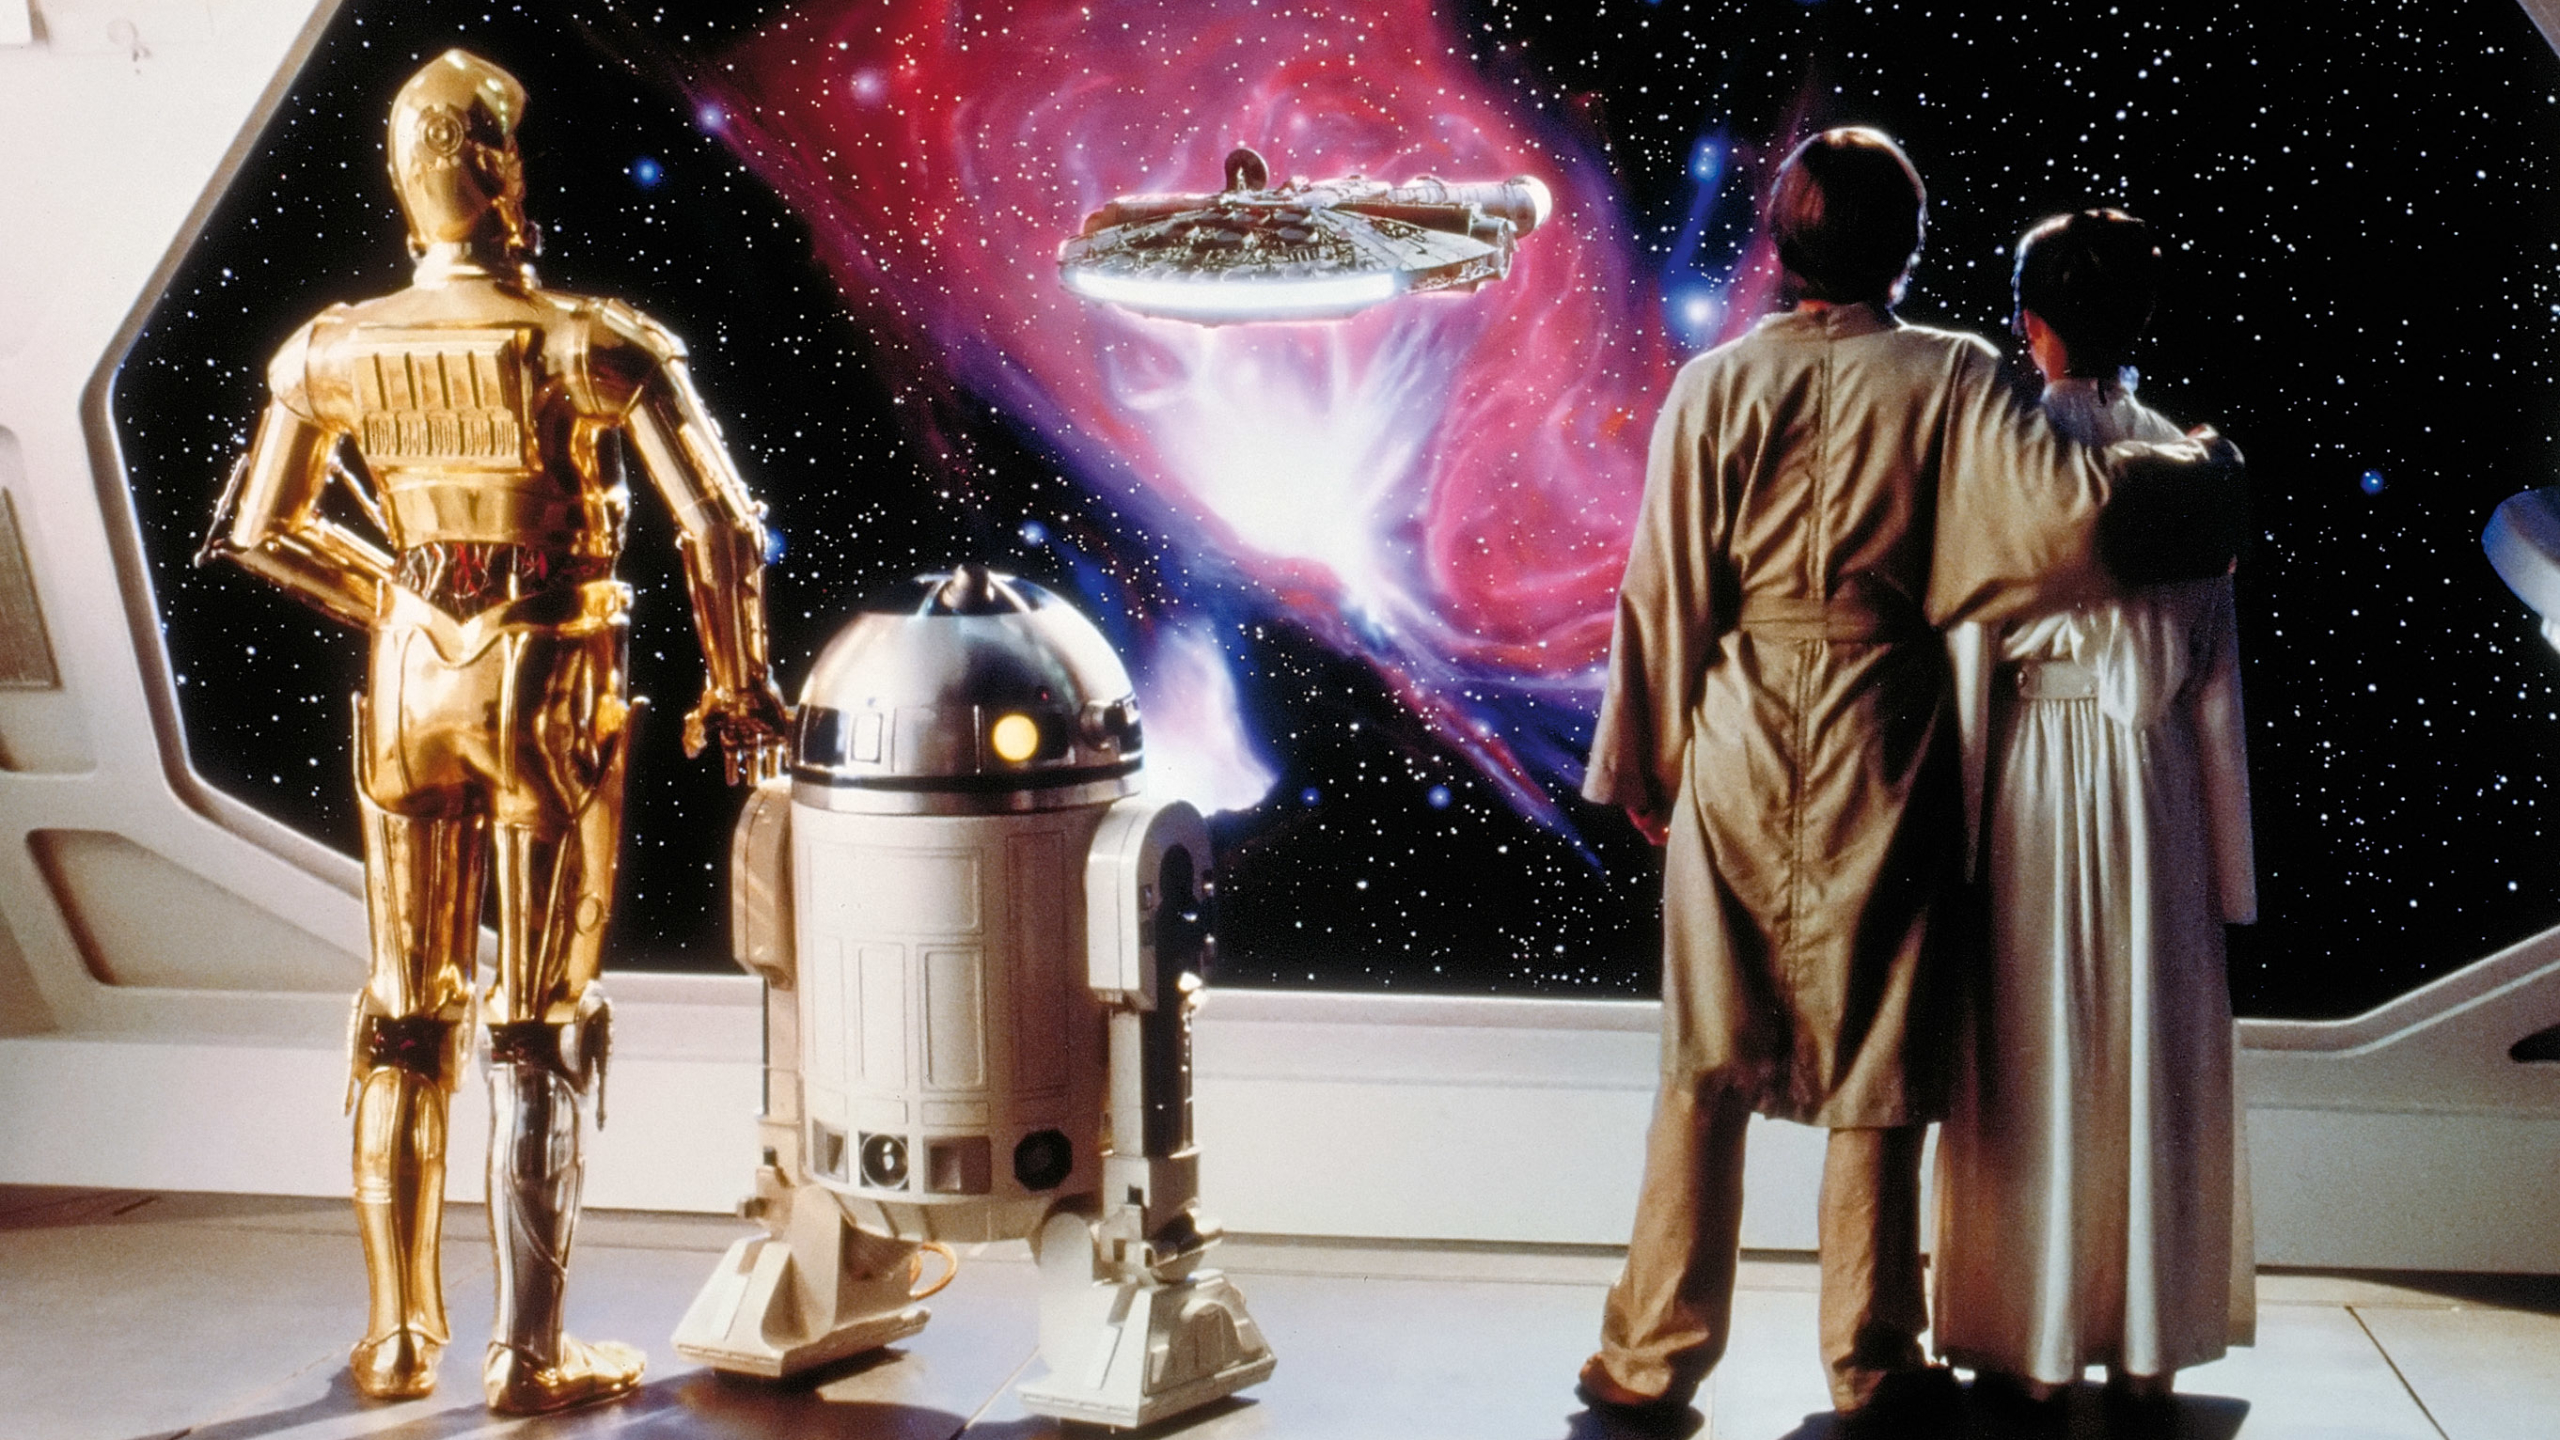 Star Wars The Empire Strikes Back Movies Science Fiction Space George Lucas Leia Organa Luke Skywalk 2560x1440